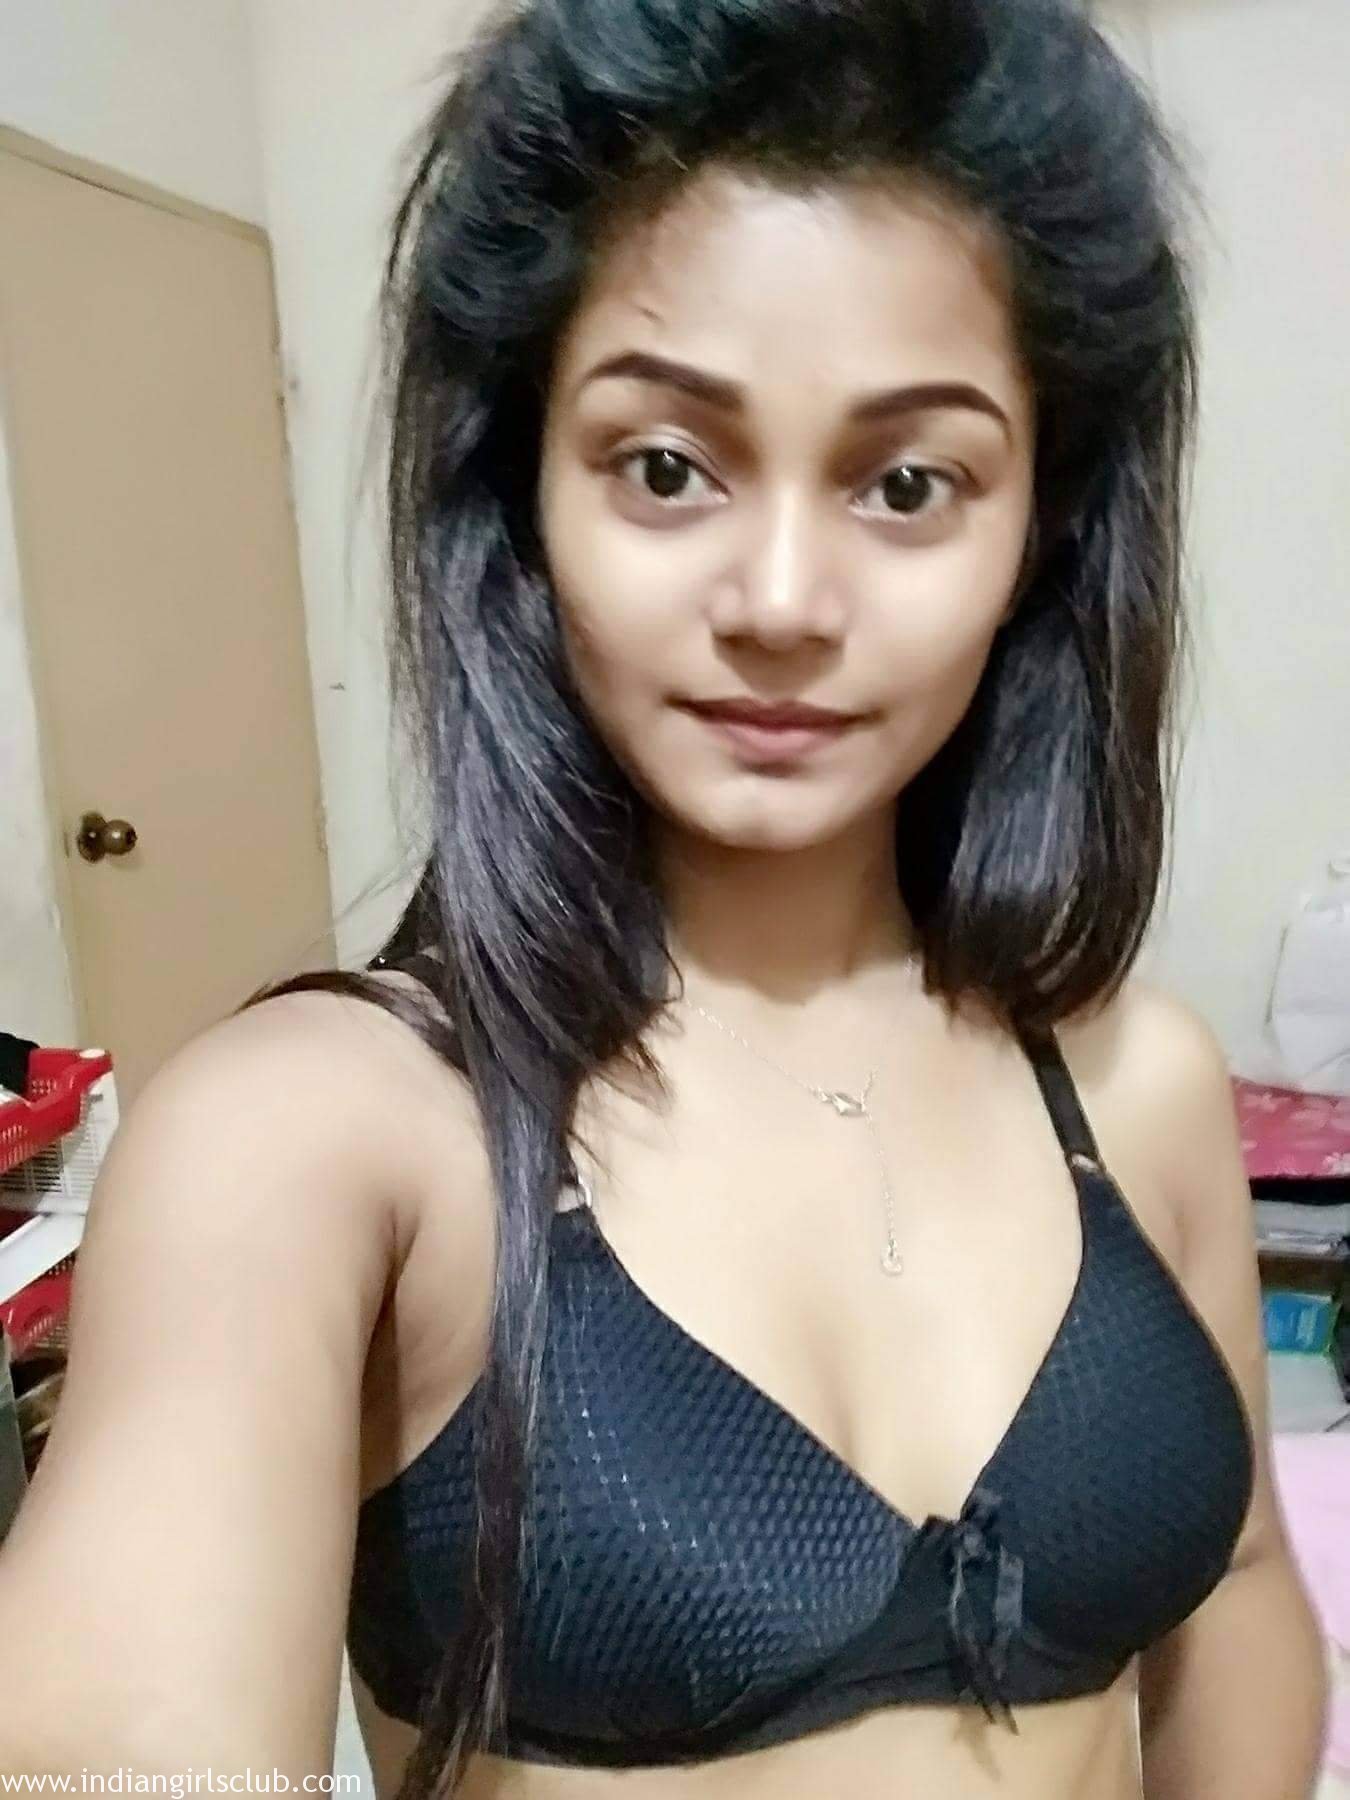 juicy_indian_teen_homemade_porn_5 - Indian Girls Club